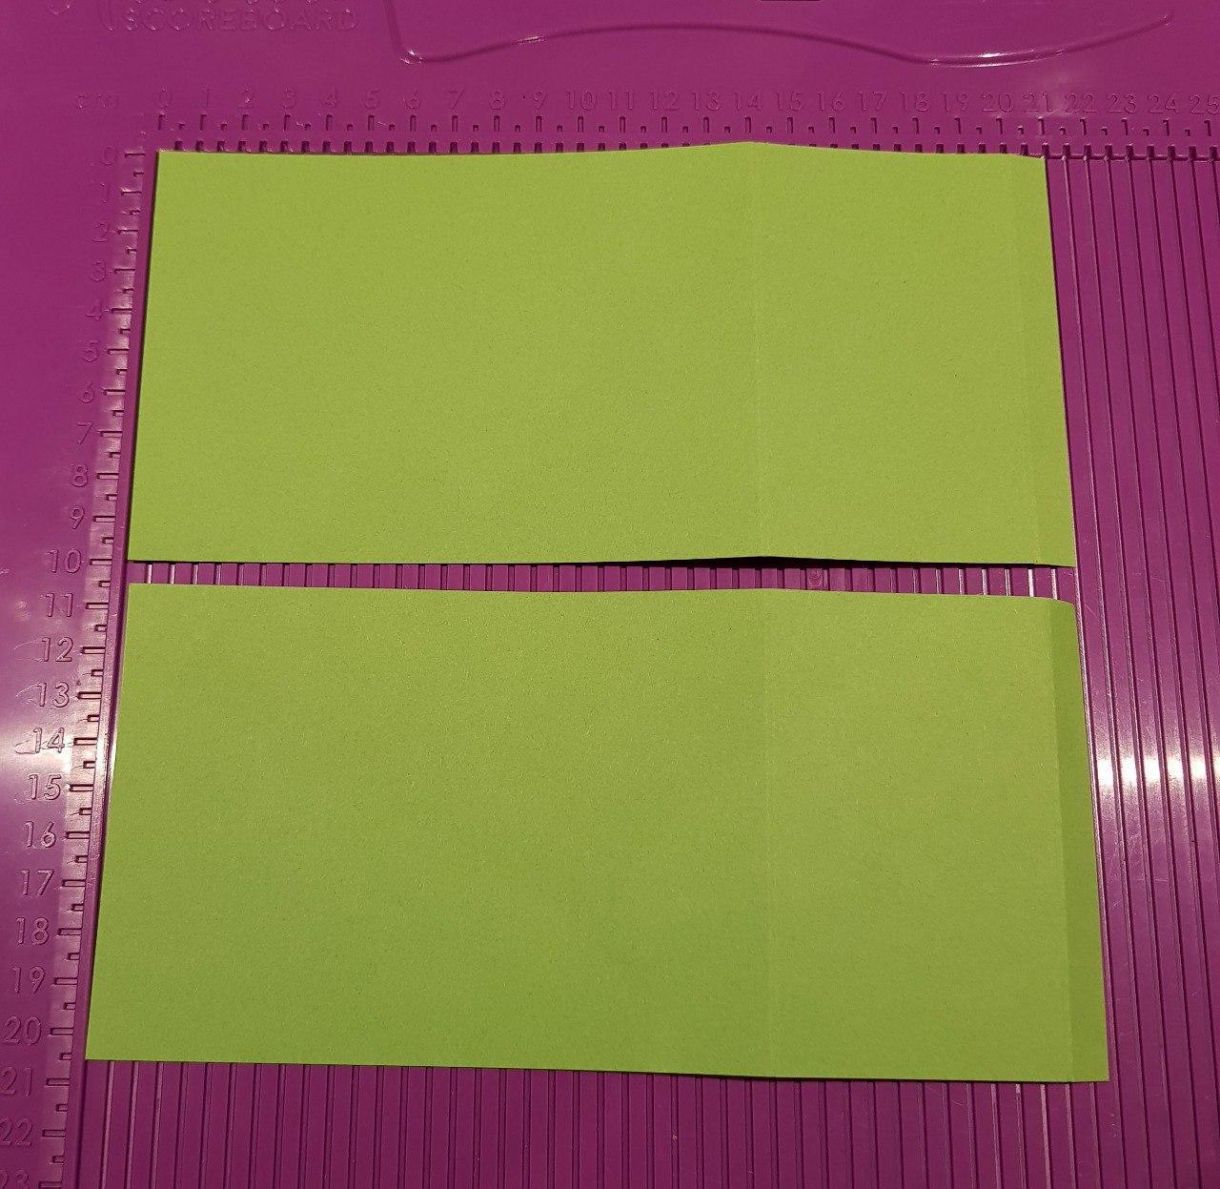 Green Yellow Main Box Pieces Scored